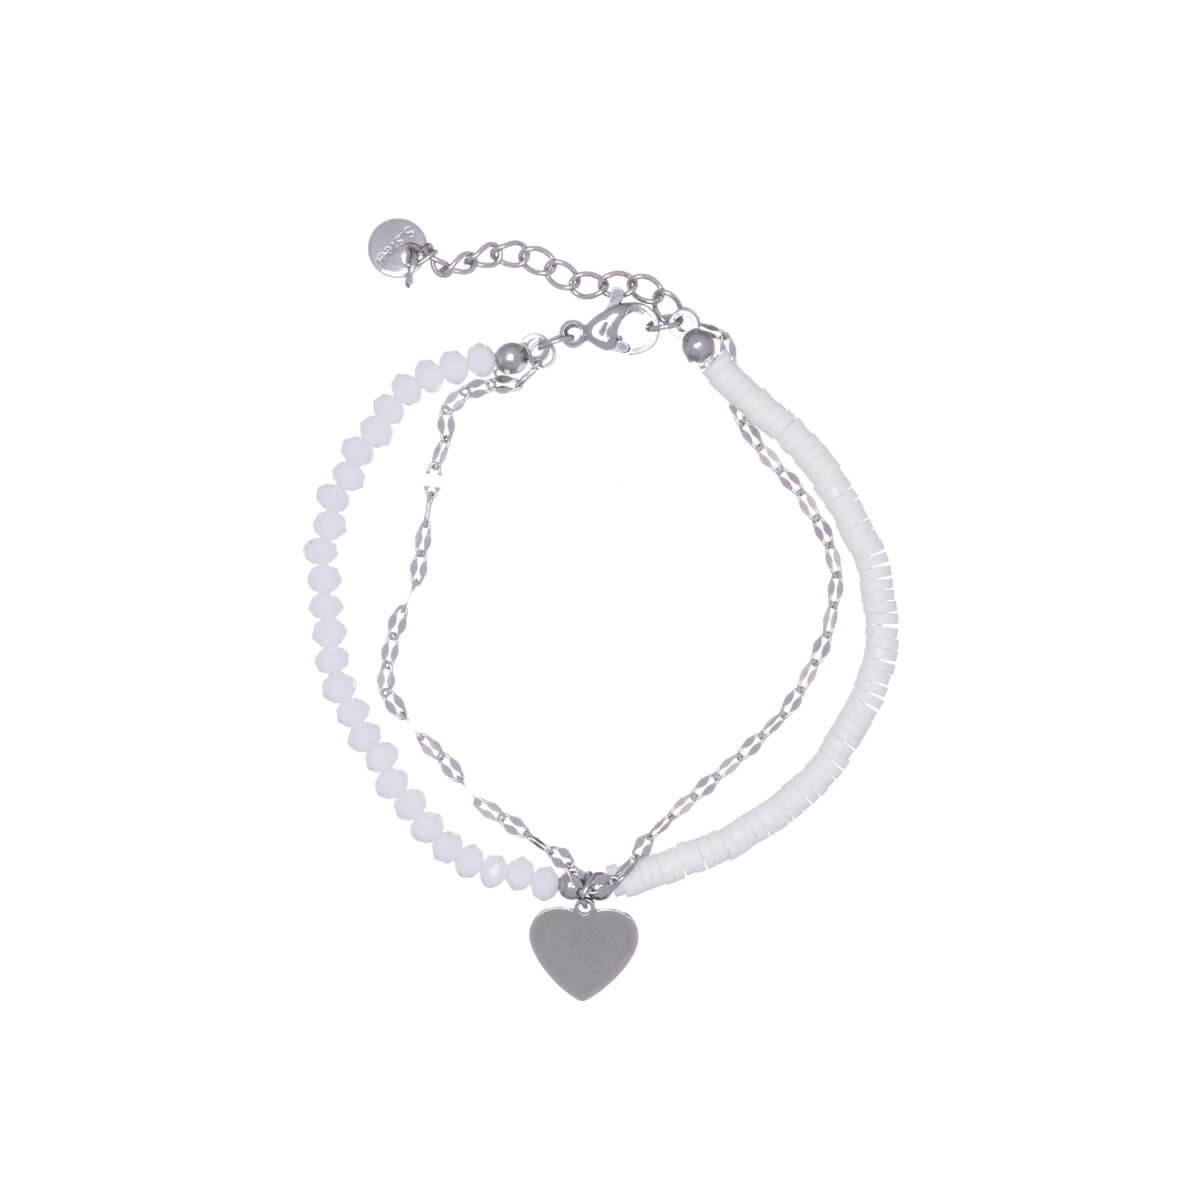 Heart jewelry with steel chain (steel 316L)